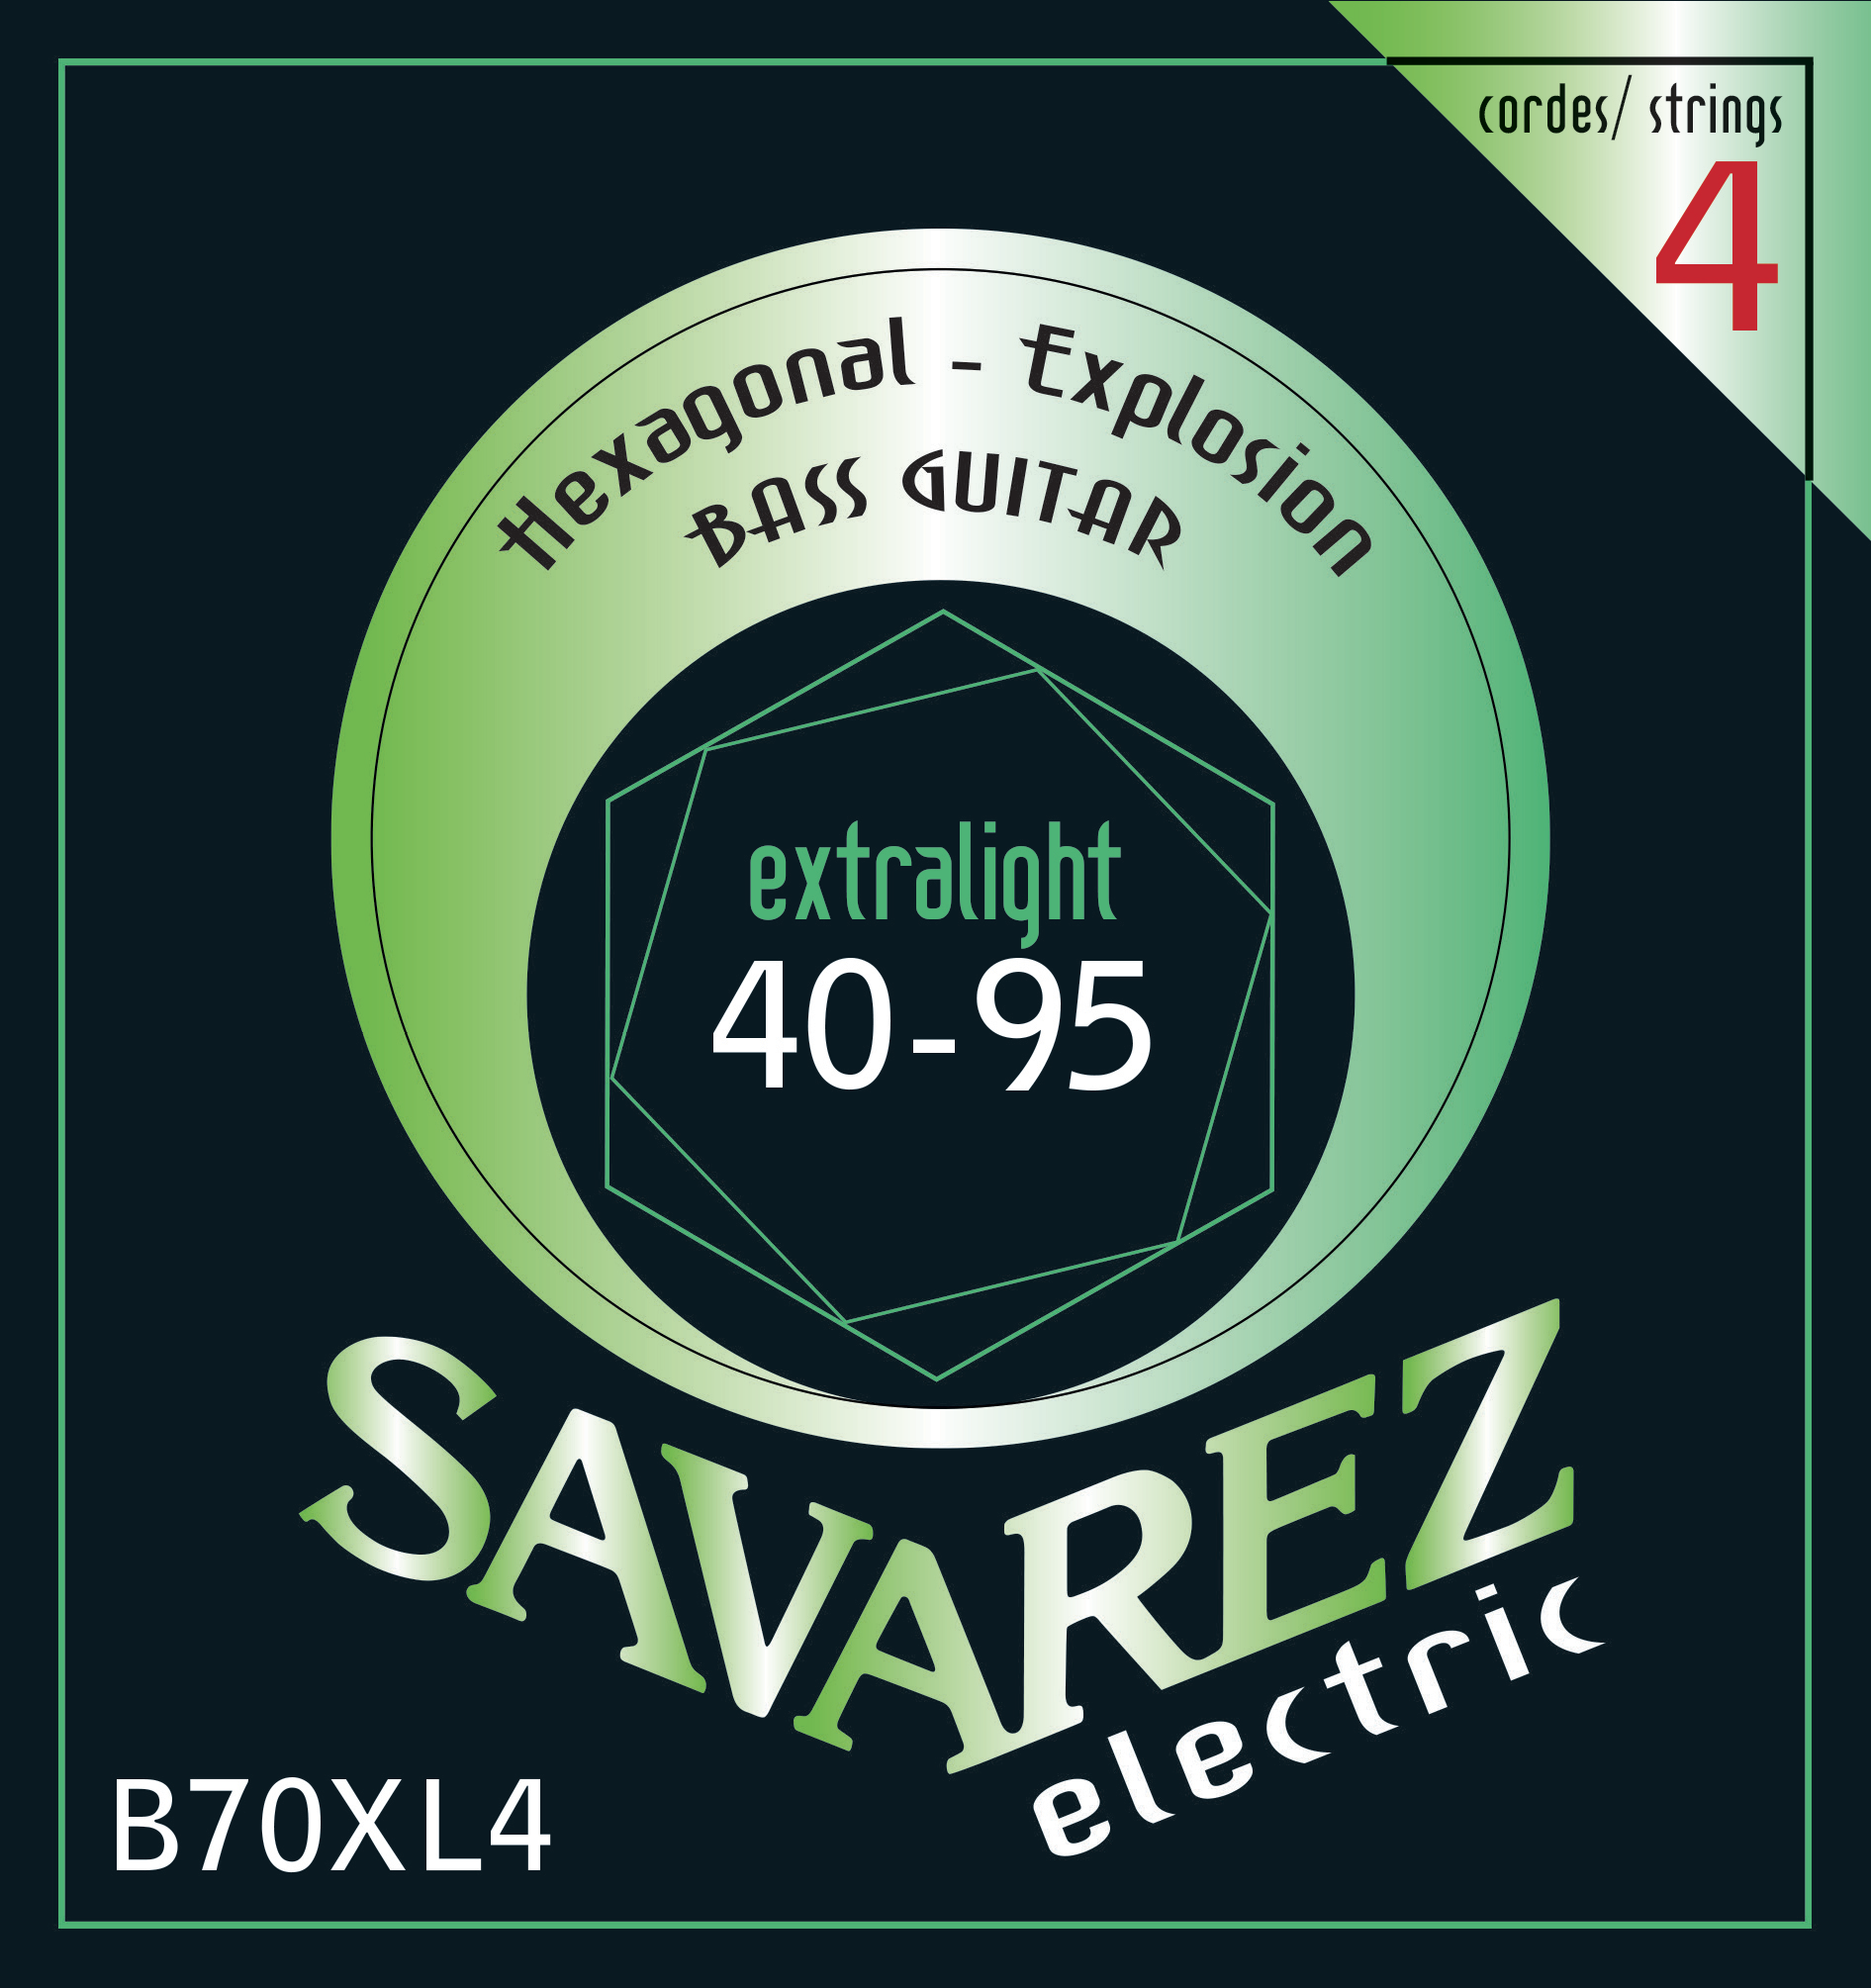 SAVAREZ ELECTRIC HEXAGONAL EXPLOSION BASSE B70XL4